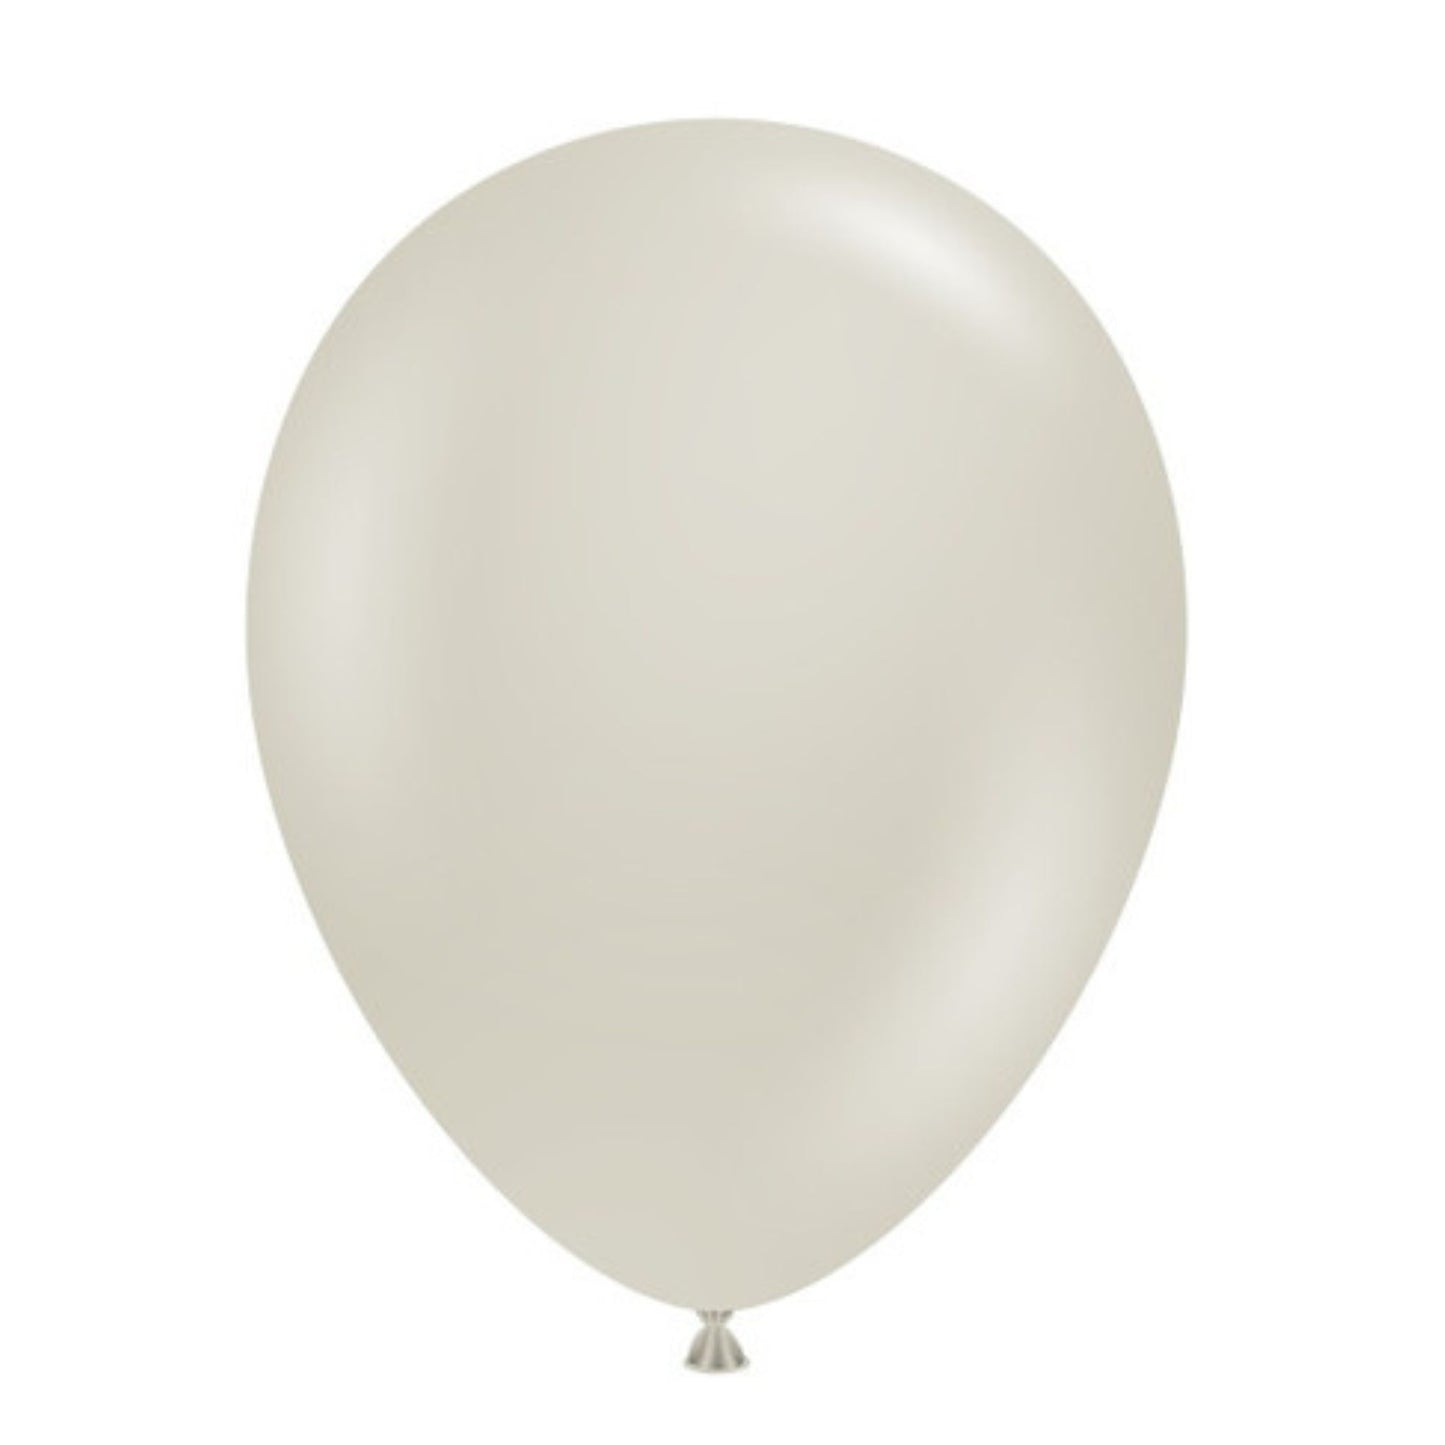 11 inch helium filled Stone latex balloon